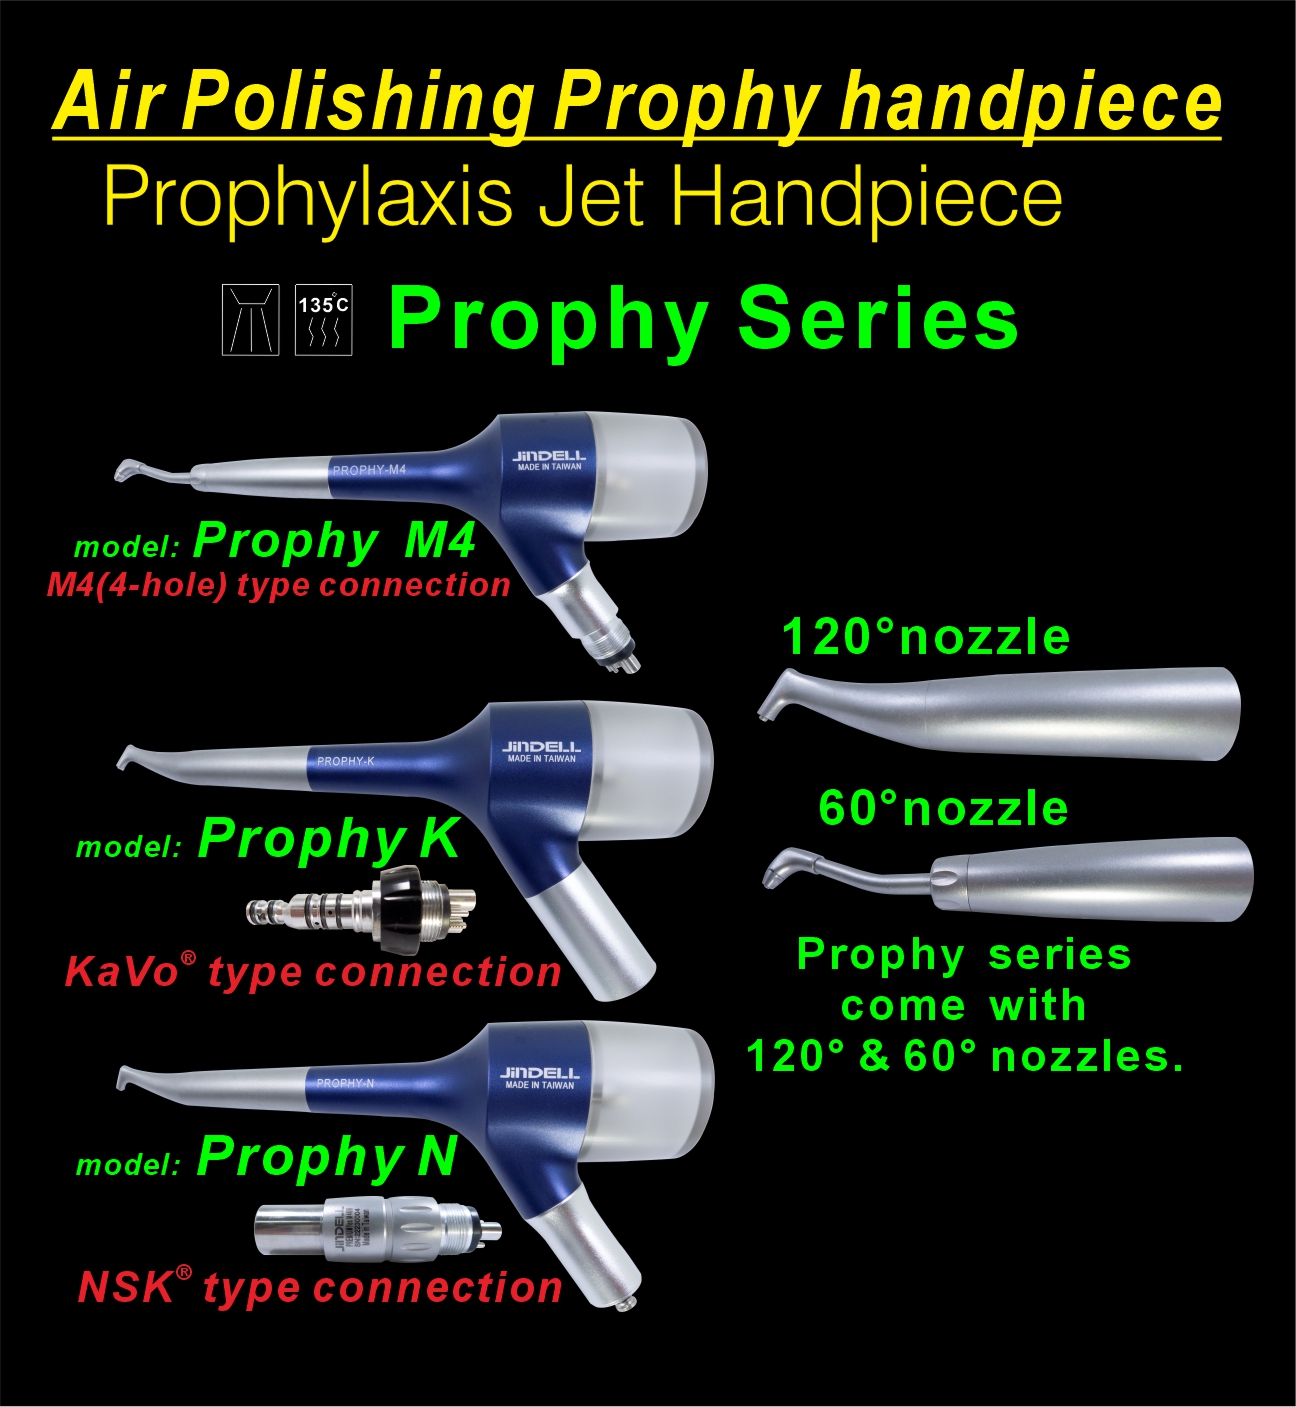 Prophy Series Air Polishing Prophylaxis Jet handpiece